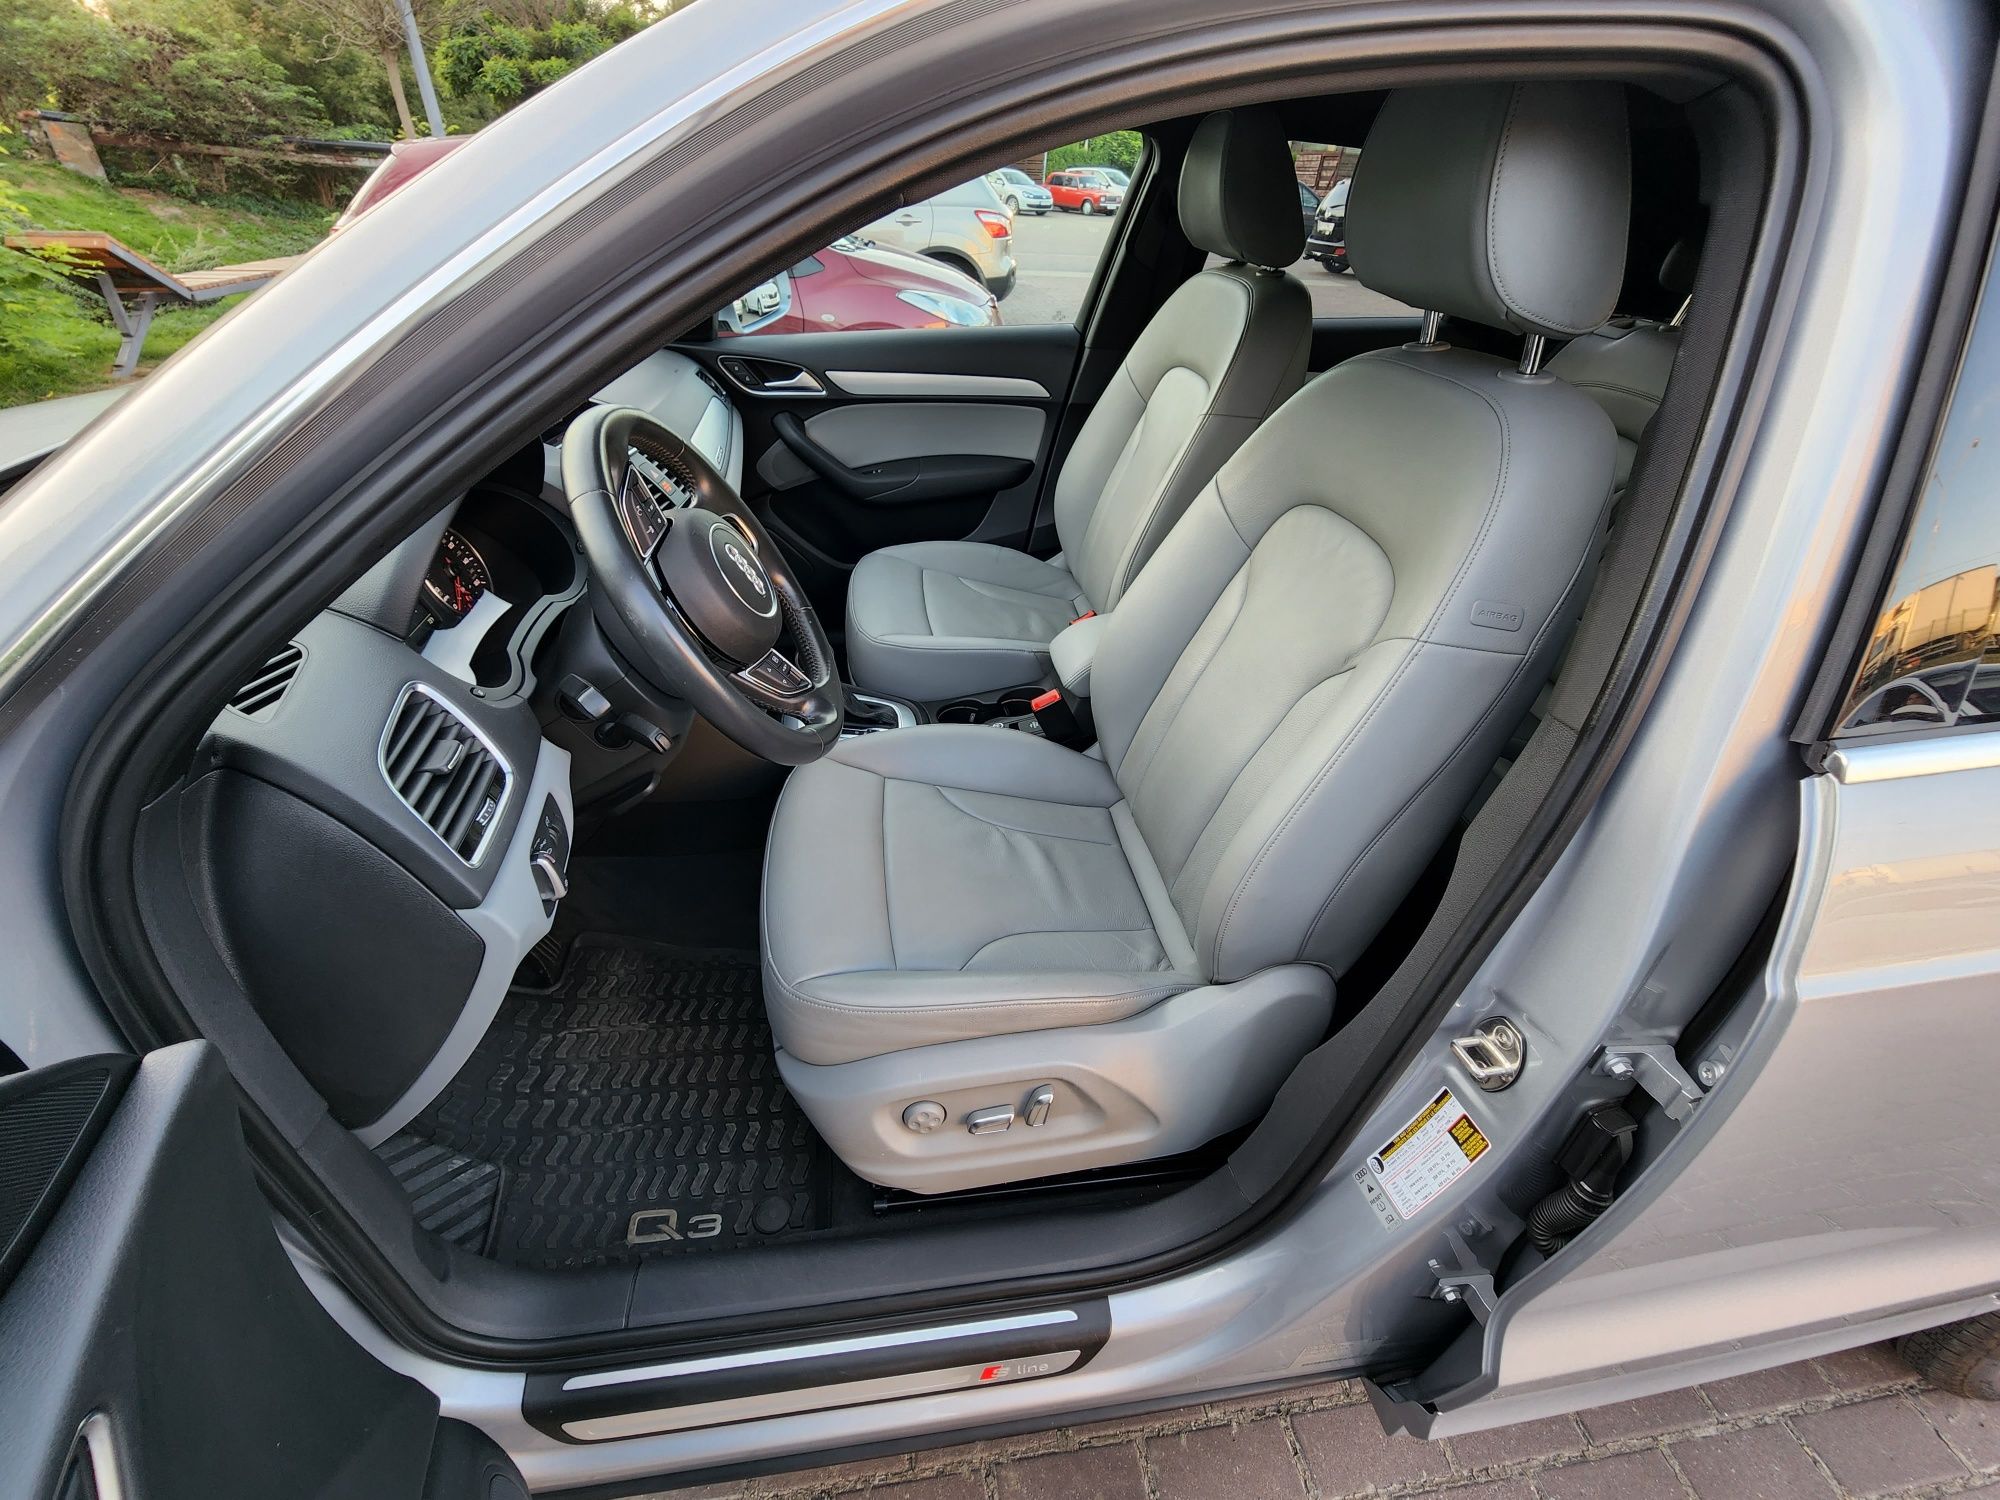 Продам  автомобіль Audi Q3 S-line Premium Plus , quattro 2.0 , 2018р.